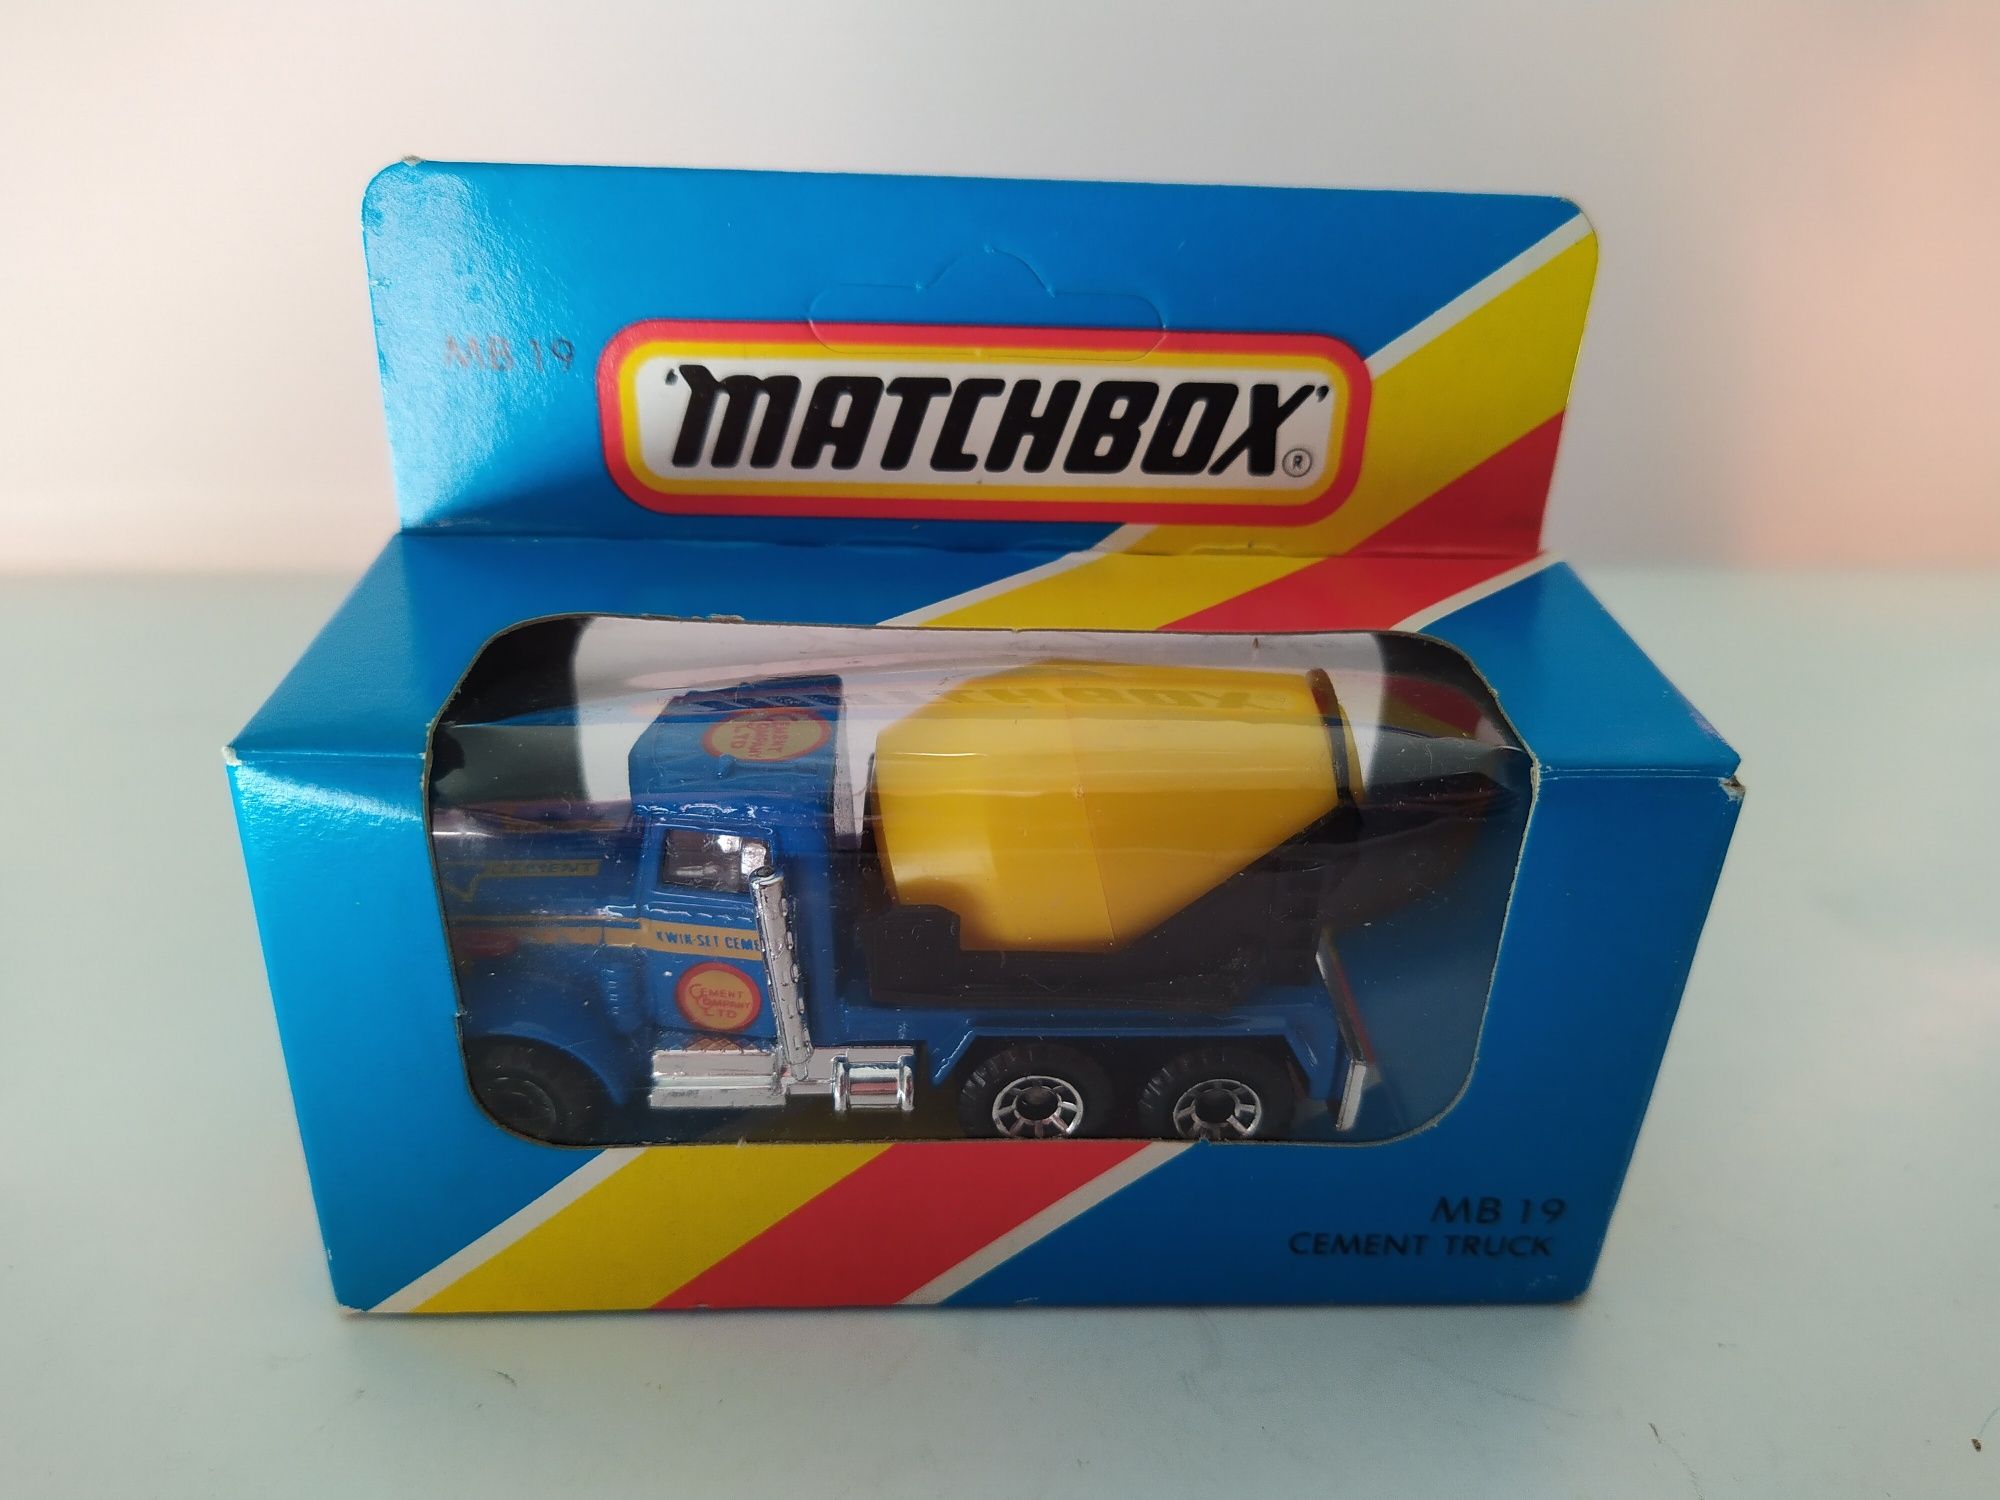 Peterbilt Betoniare Matchbox pudełko